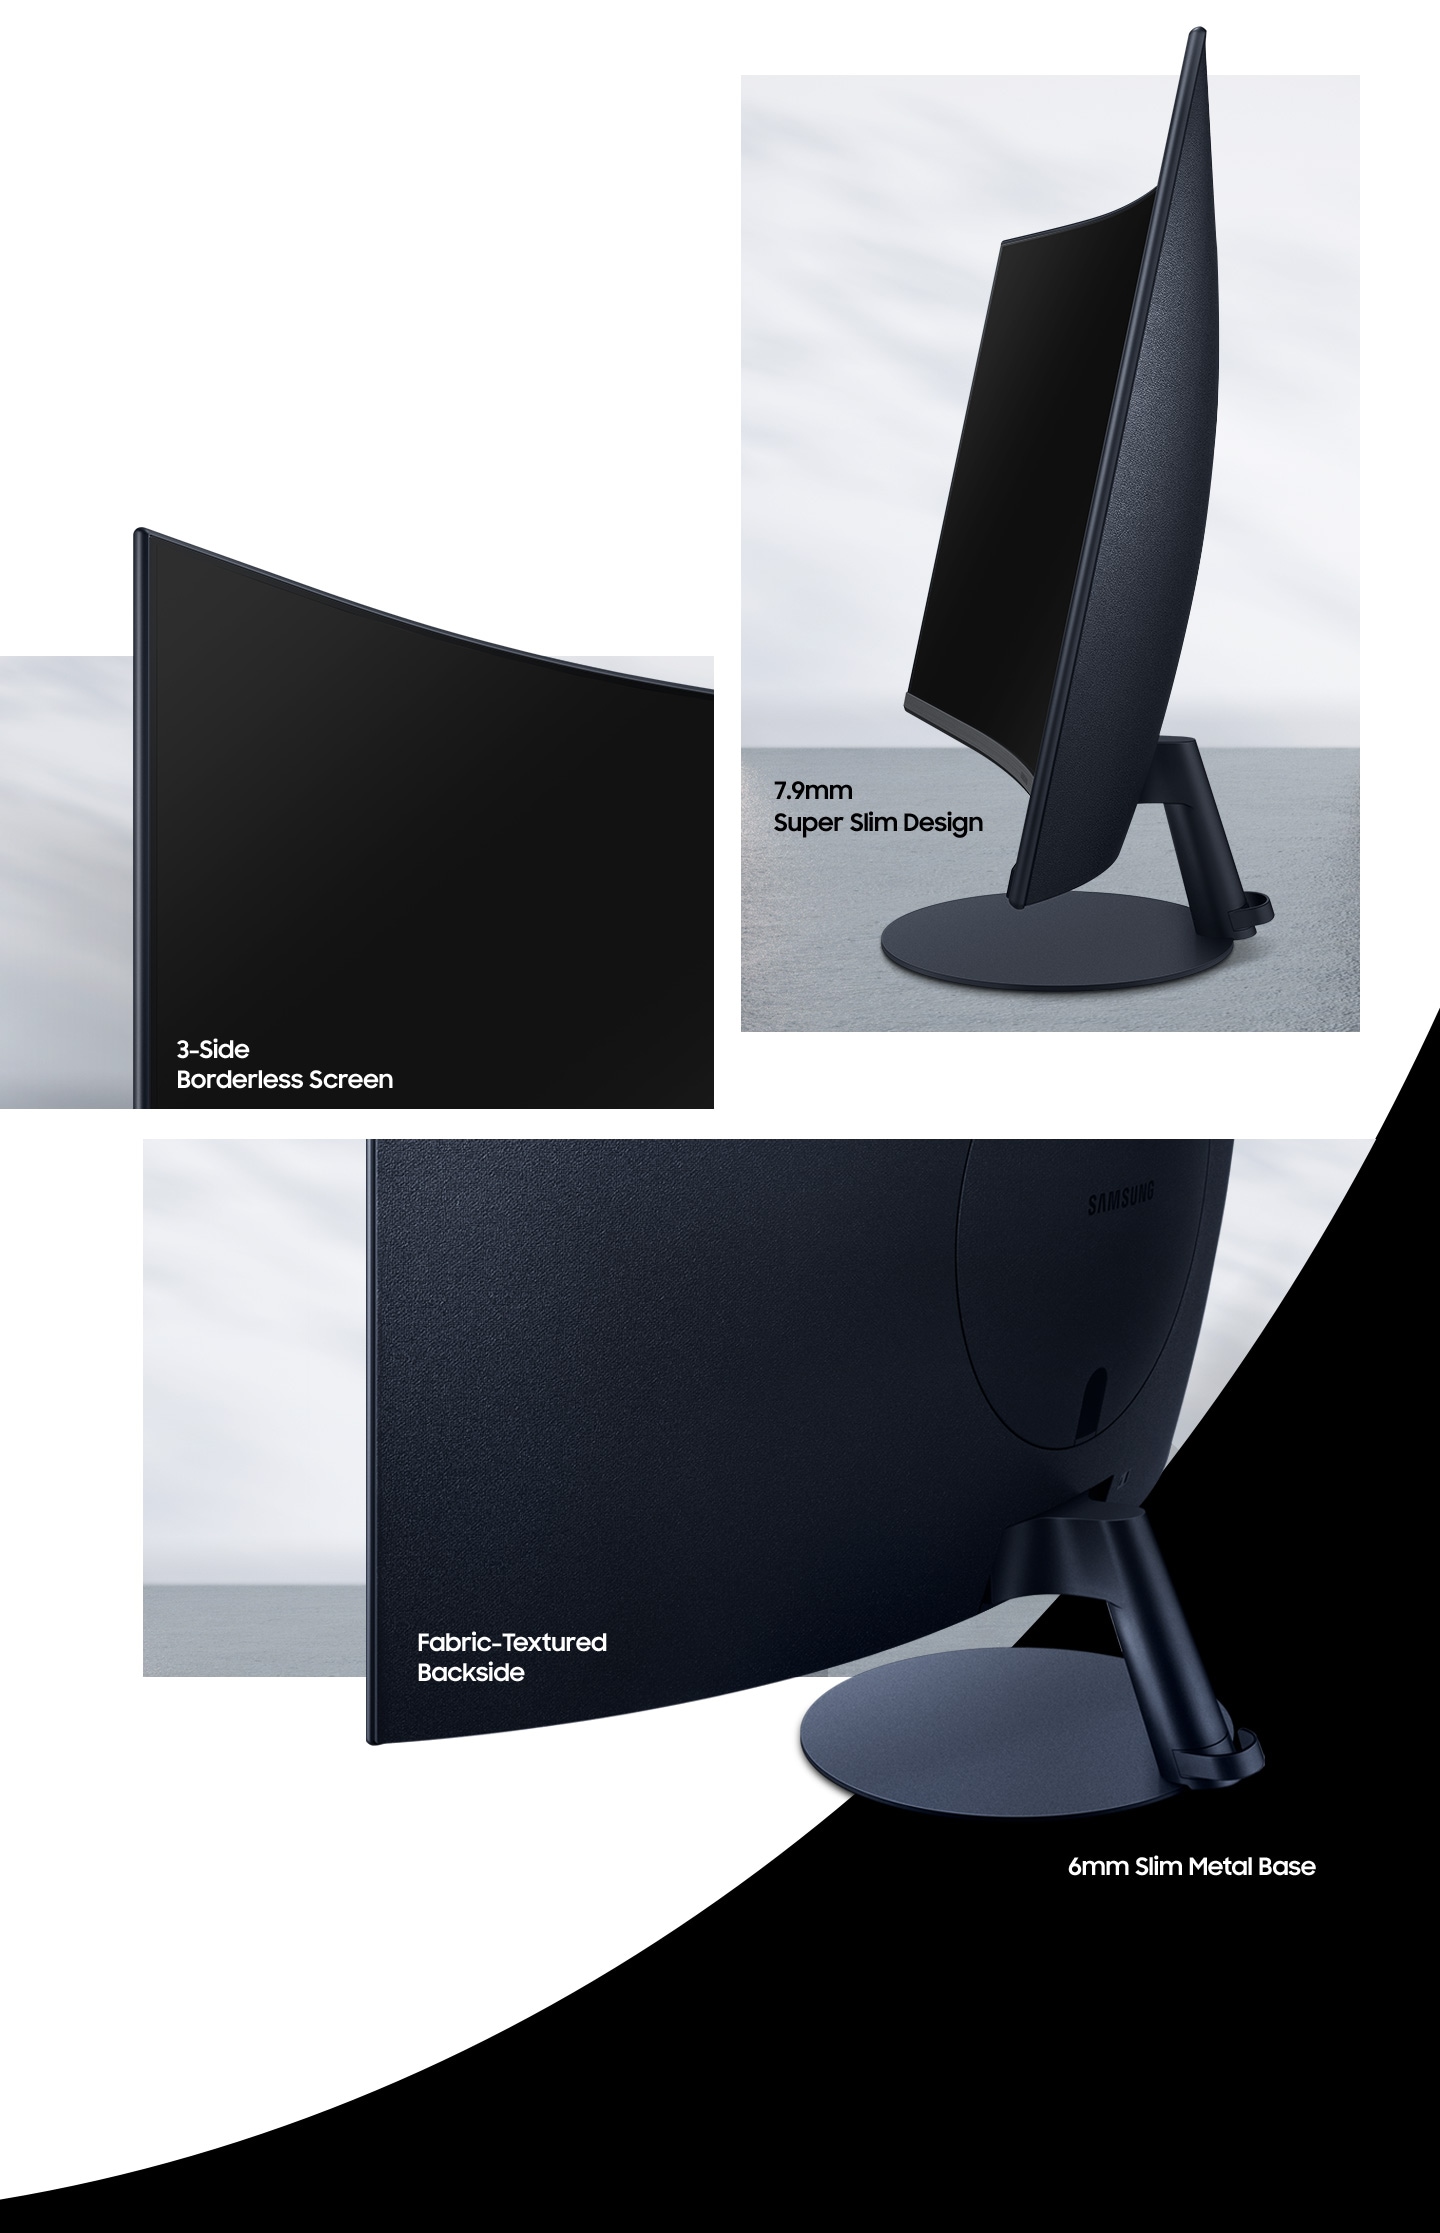 S3 Monitor's 7.9mm Super Slim Design, 3-side Borderless Screen, Fabric-Textured Backside, and 6mm Slim Metal Base.